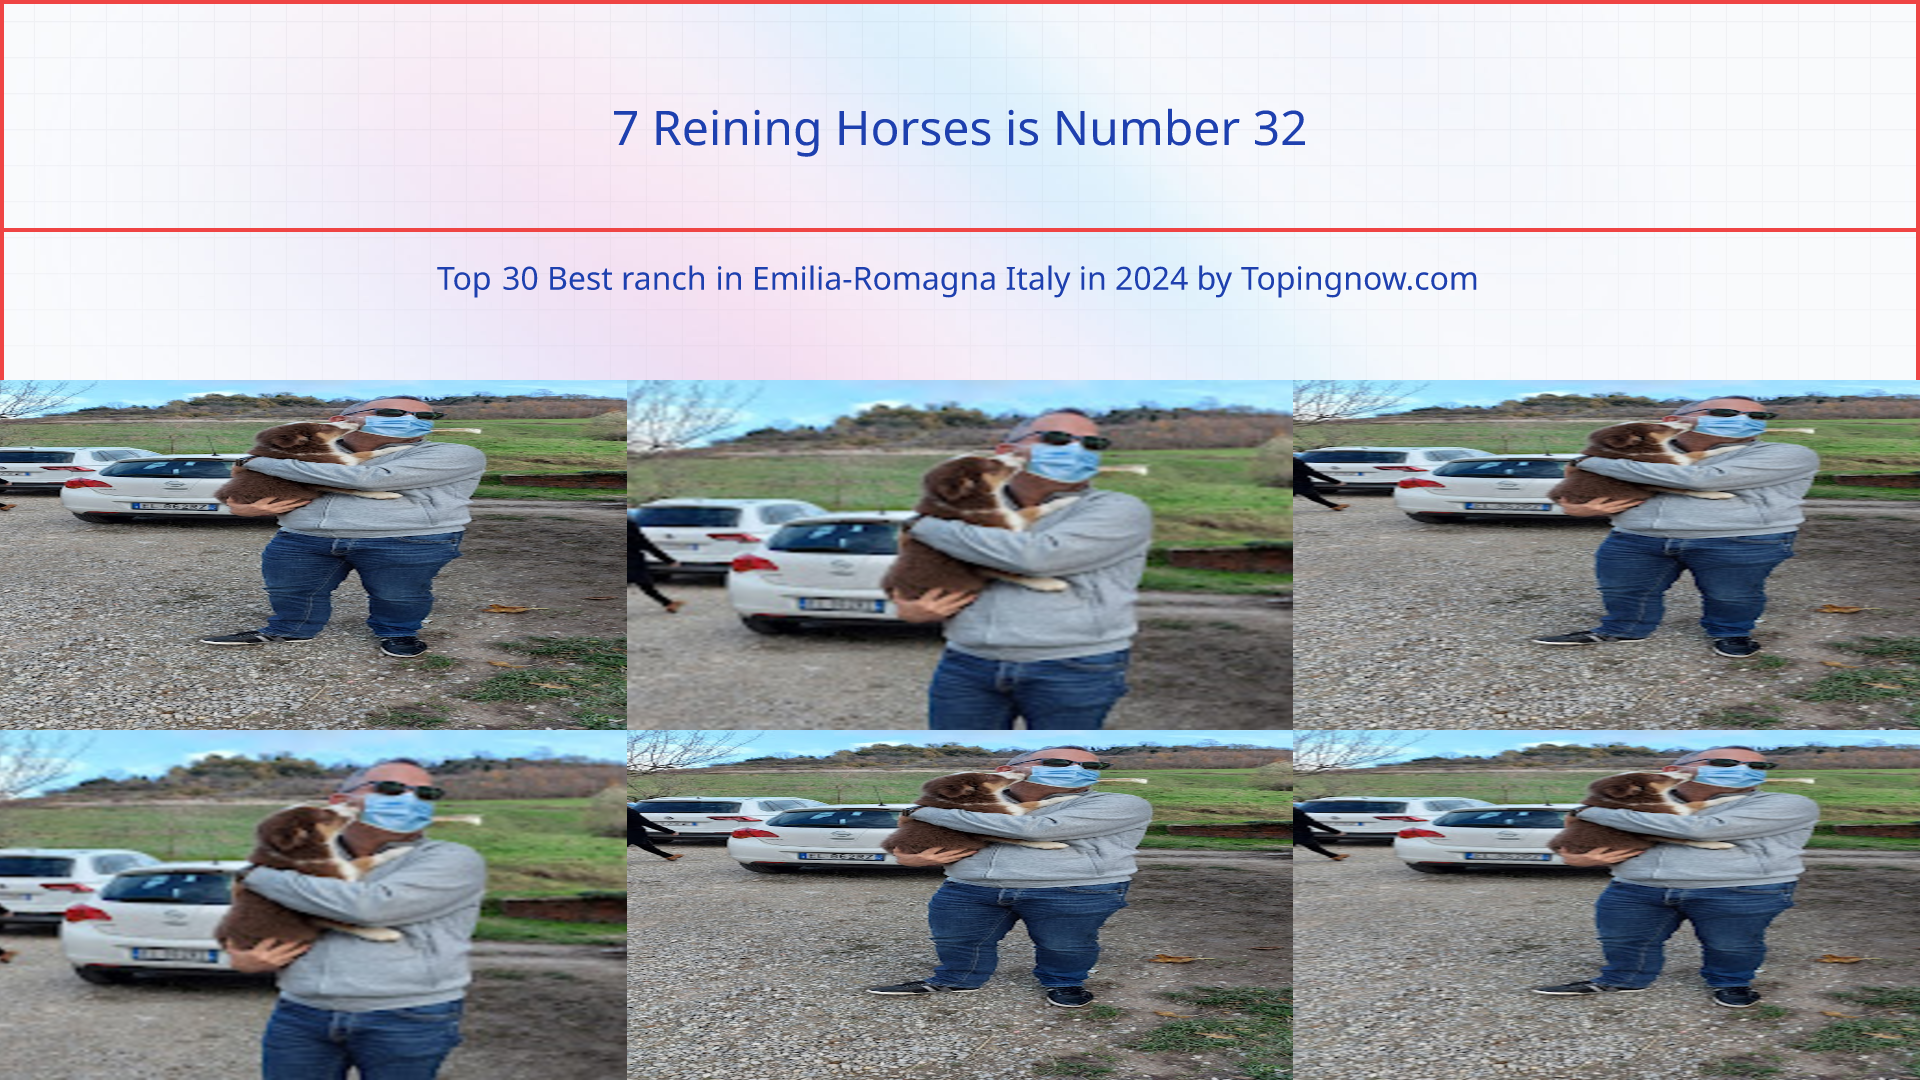 7 Reining Horses: Top 30 Best ranch in Emilia-Romagna Italy in 2024